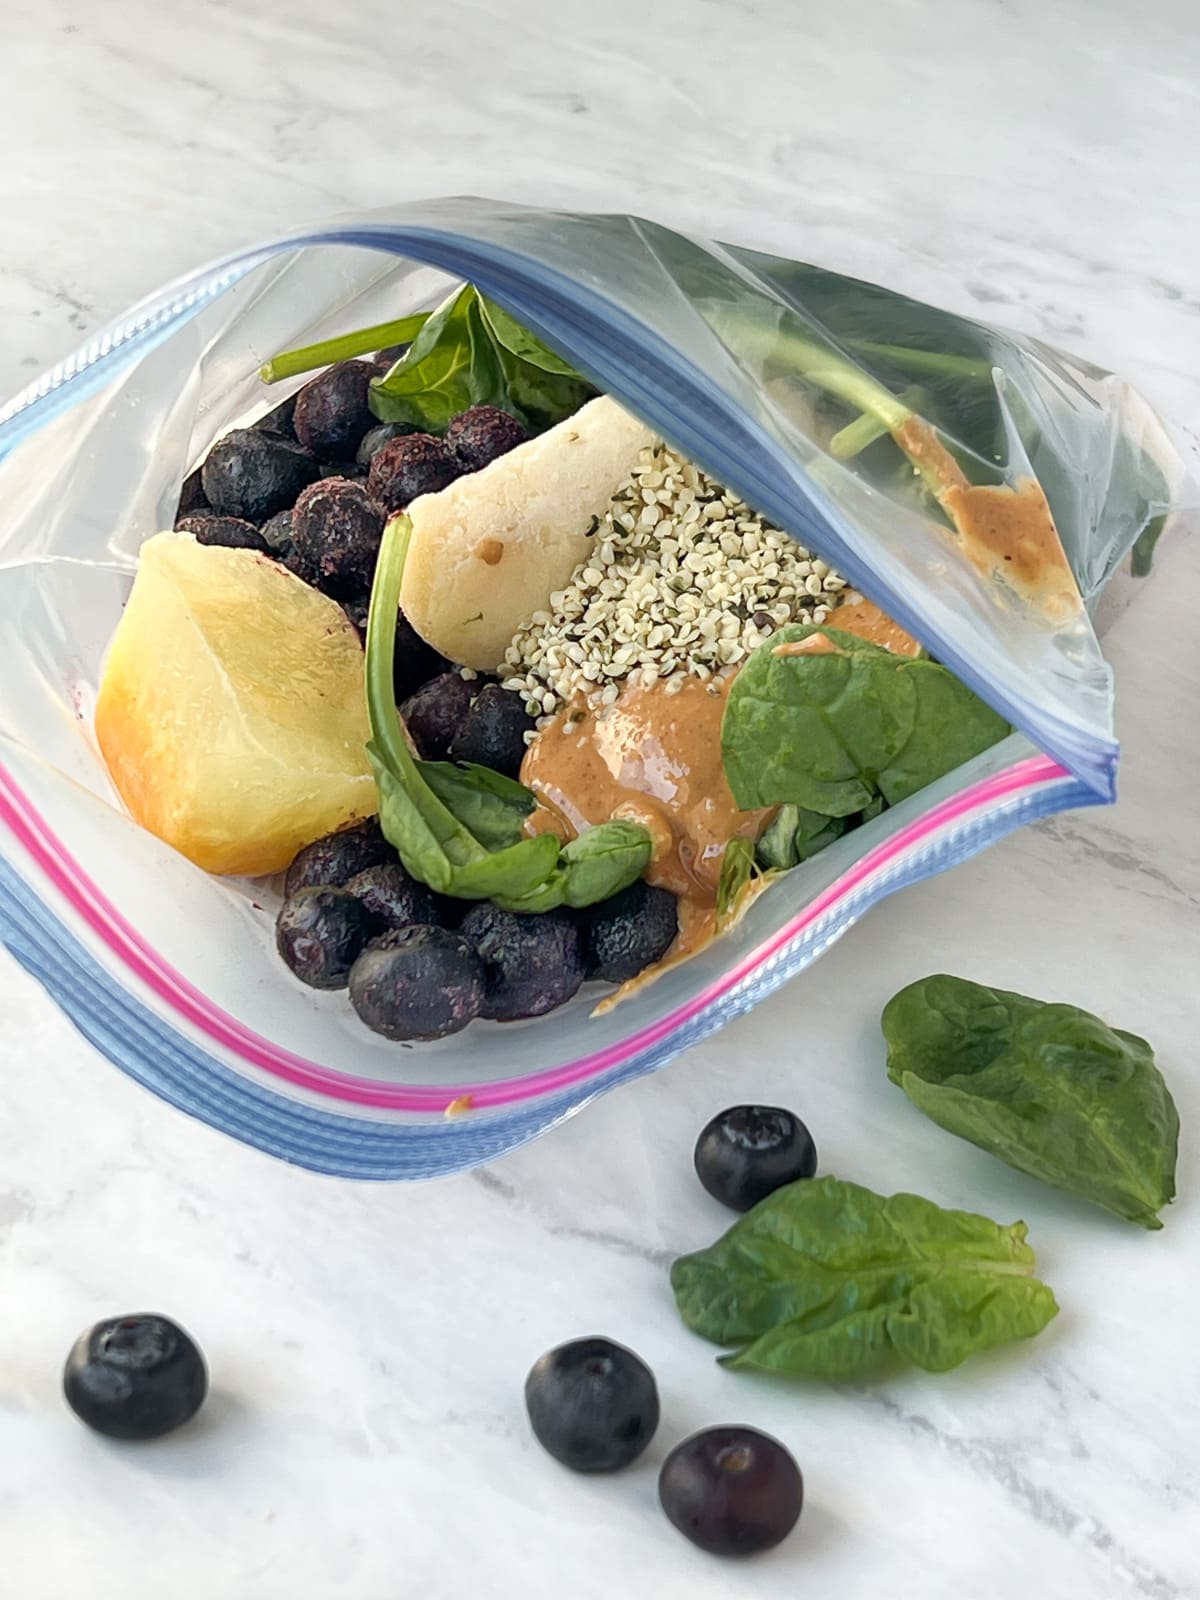 Frozen bananas, blueberries, fresh spinach and hemp hearts in a ziplock bag.